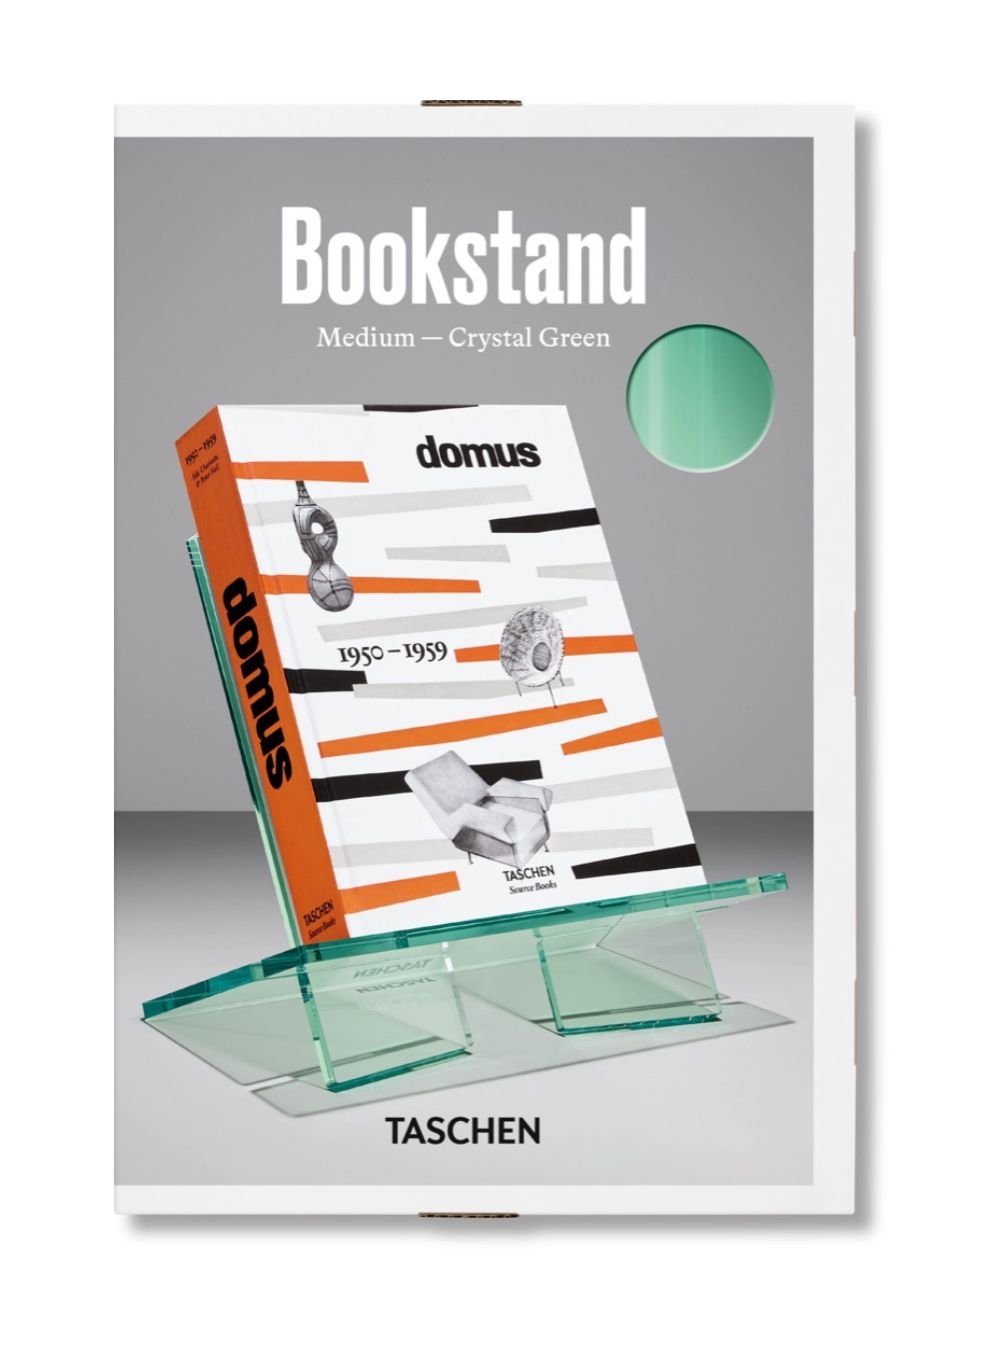 TASCHEN | Medium Crystal Green Bookstand